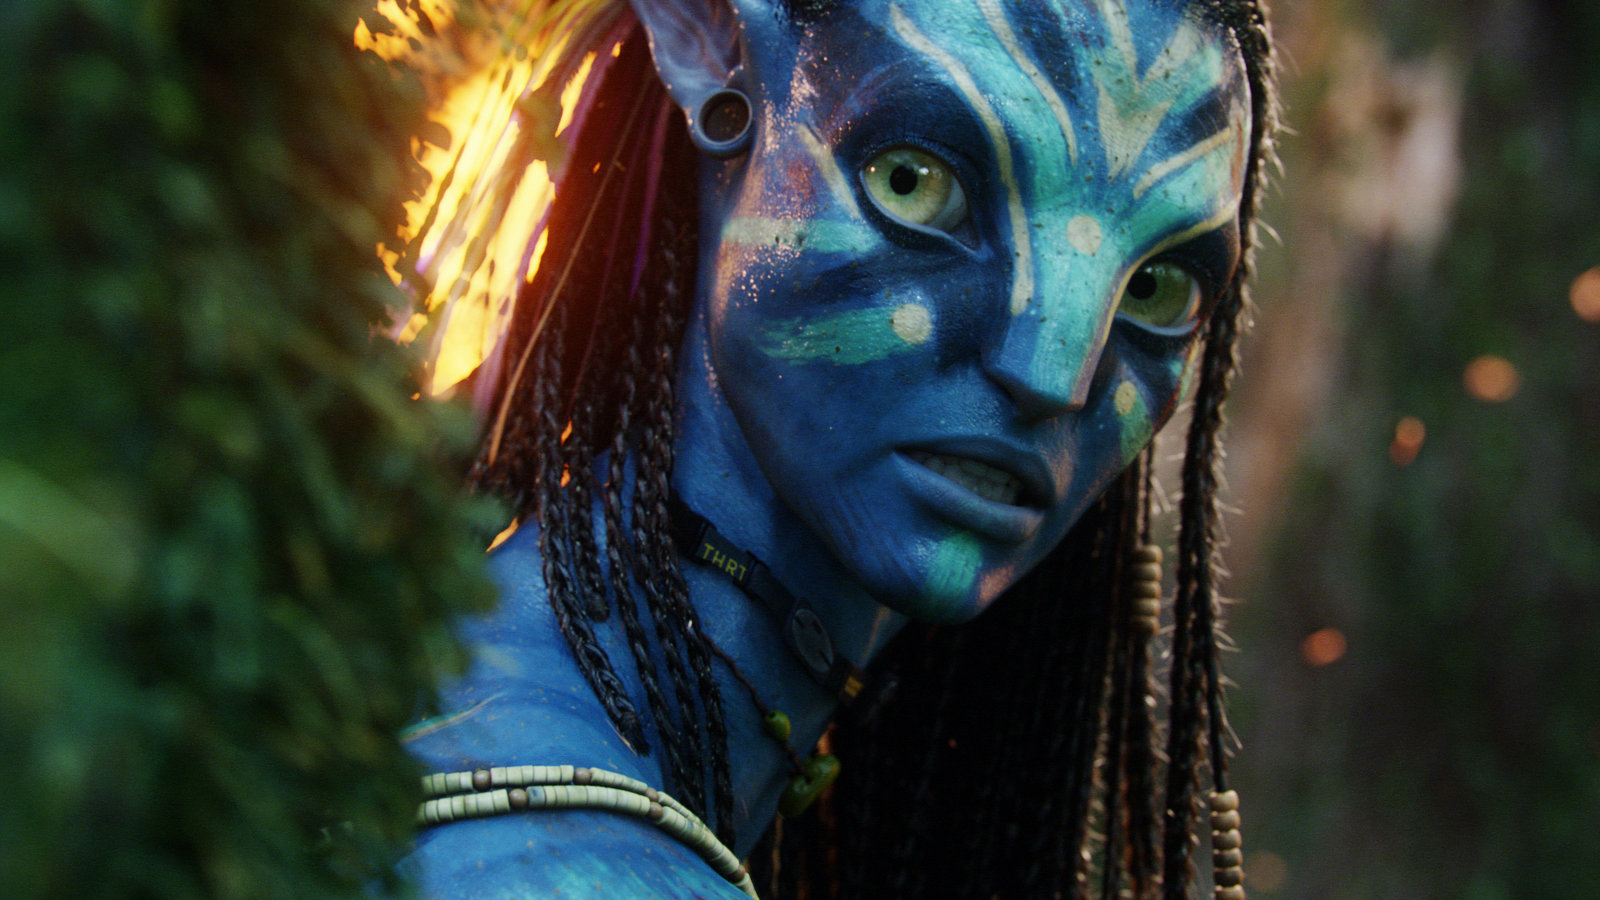 Avatar - Limited Steelbook Edition (4K Ultra HD) (+ Blu-ray)